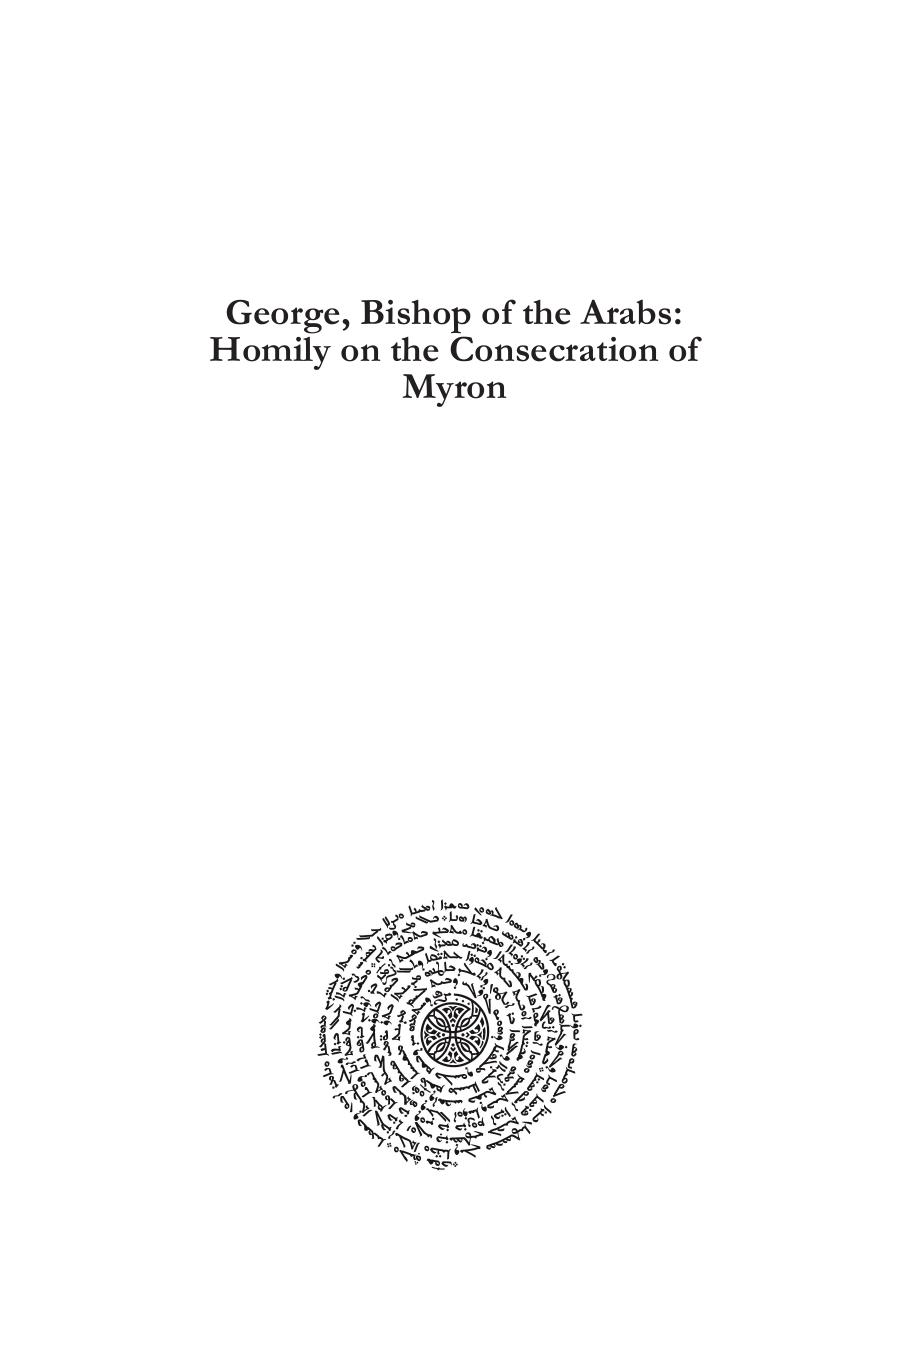 George, Bishop of the Arabs on Myron by Baby Varghese